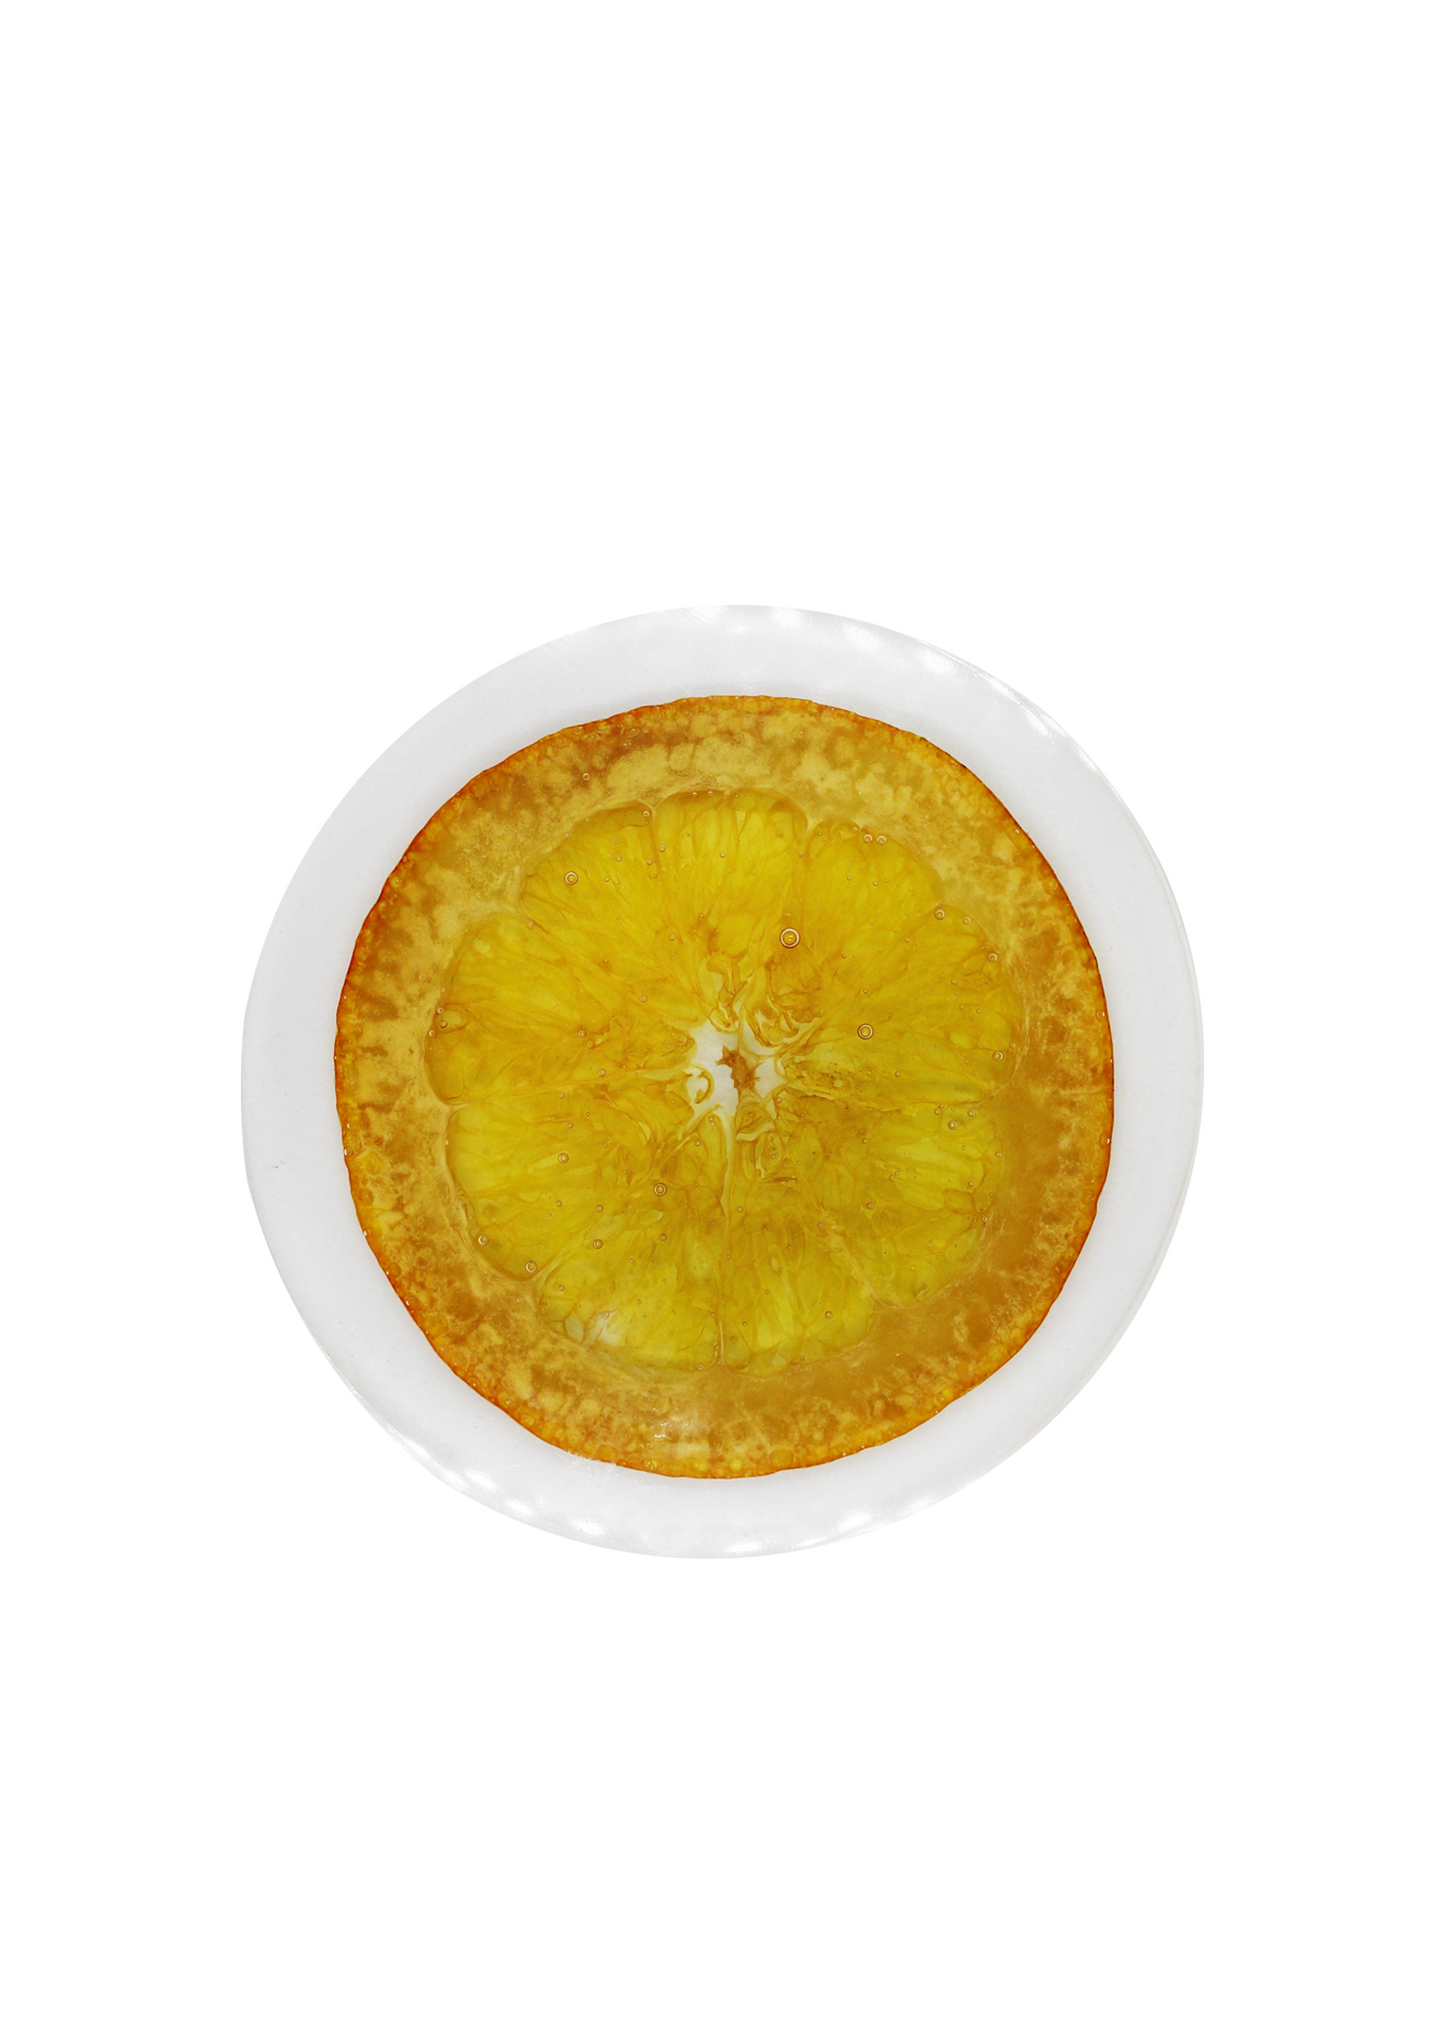 Round resin coaster featuring a suspended orange slice.